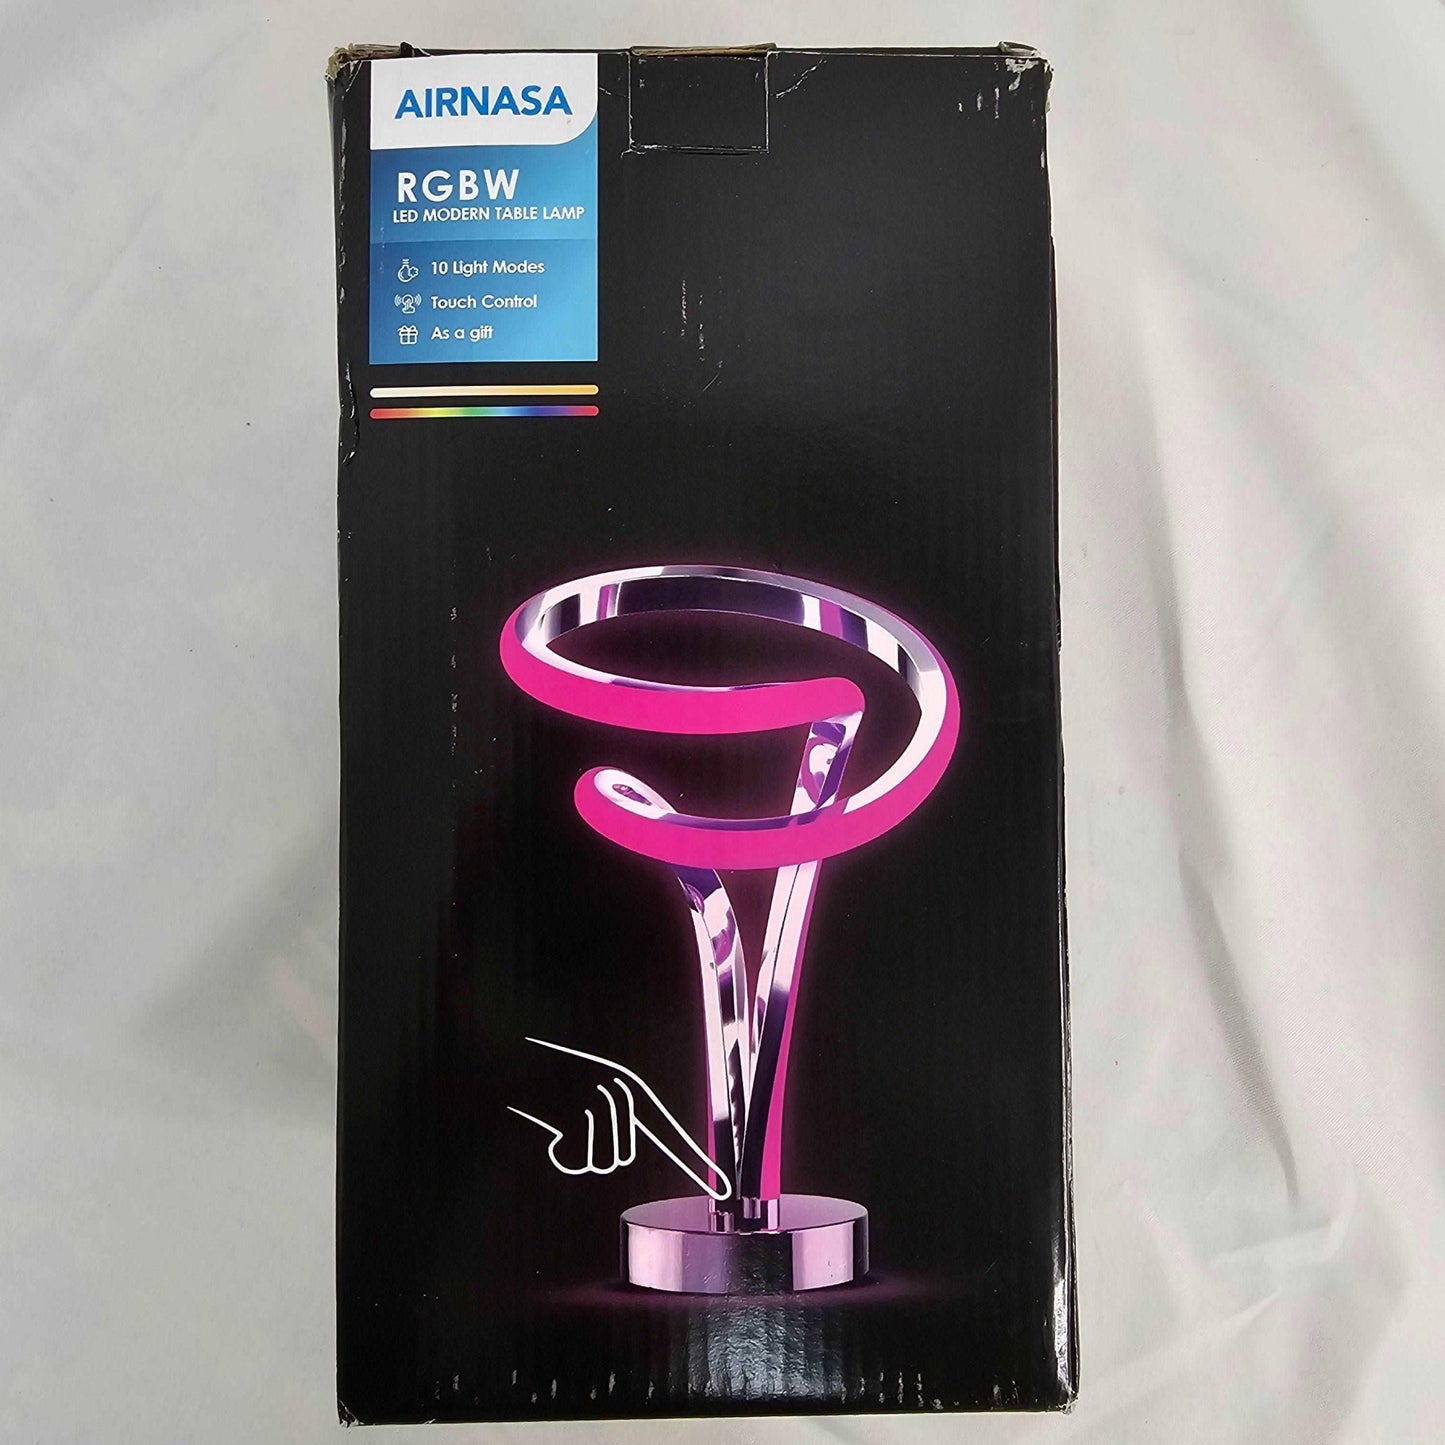 LED Modern Table Lamp Trophy Design Airnasa ‎MT7196-1 - DQ Distribution